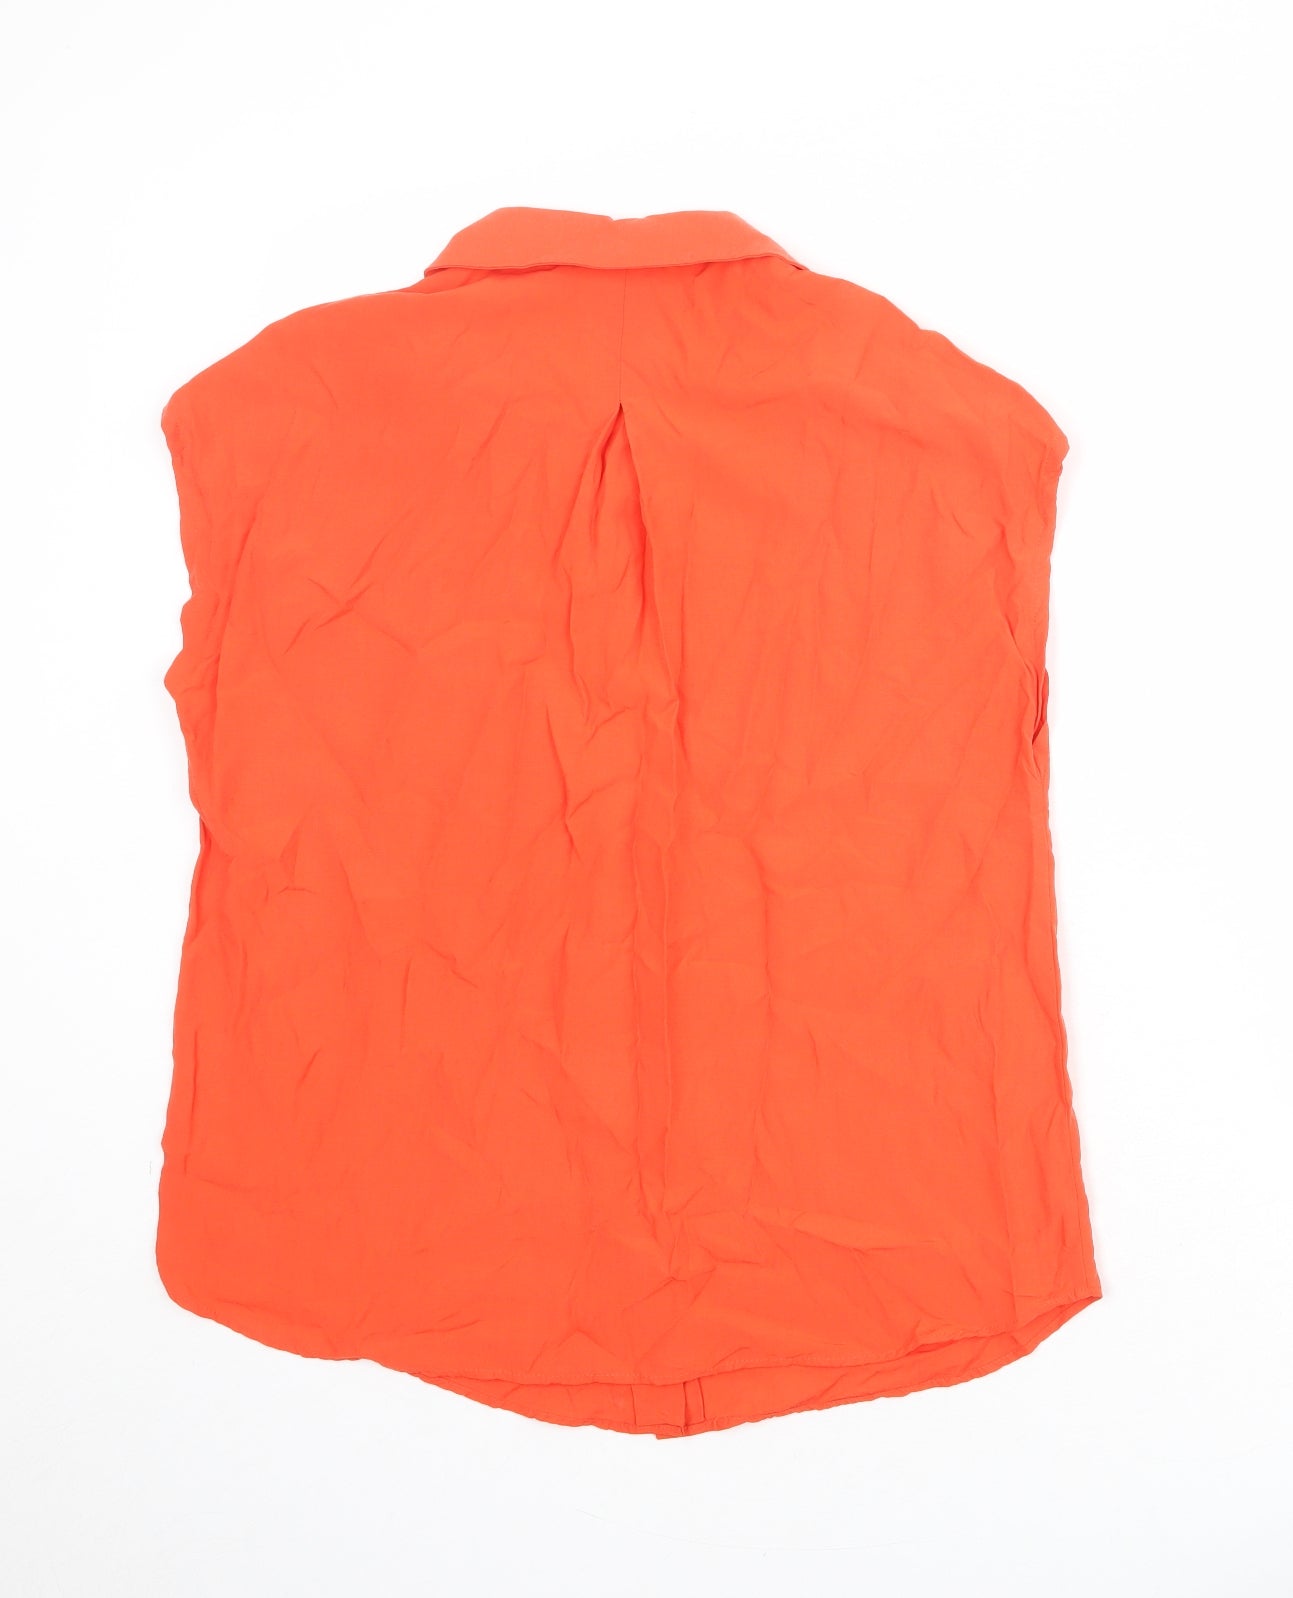 Mango Womens Orange Polyester Basic Button-Up Size 6 Collared